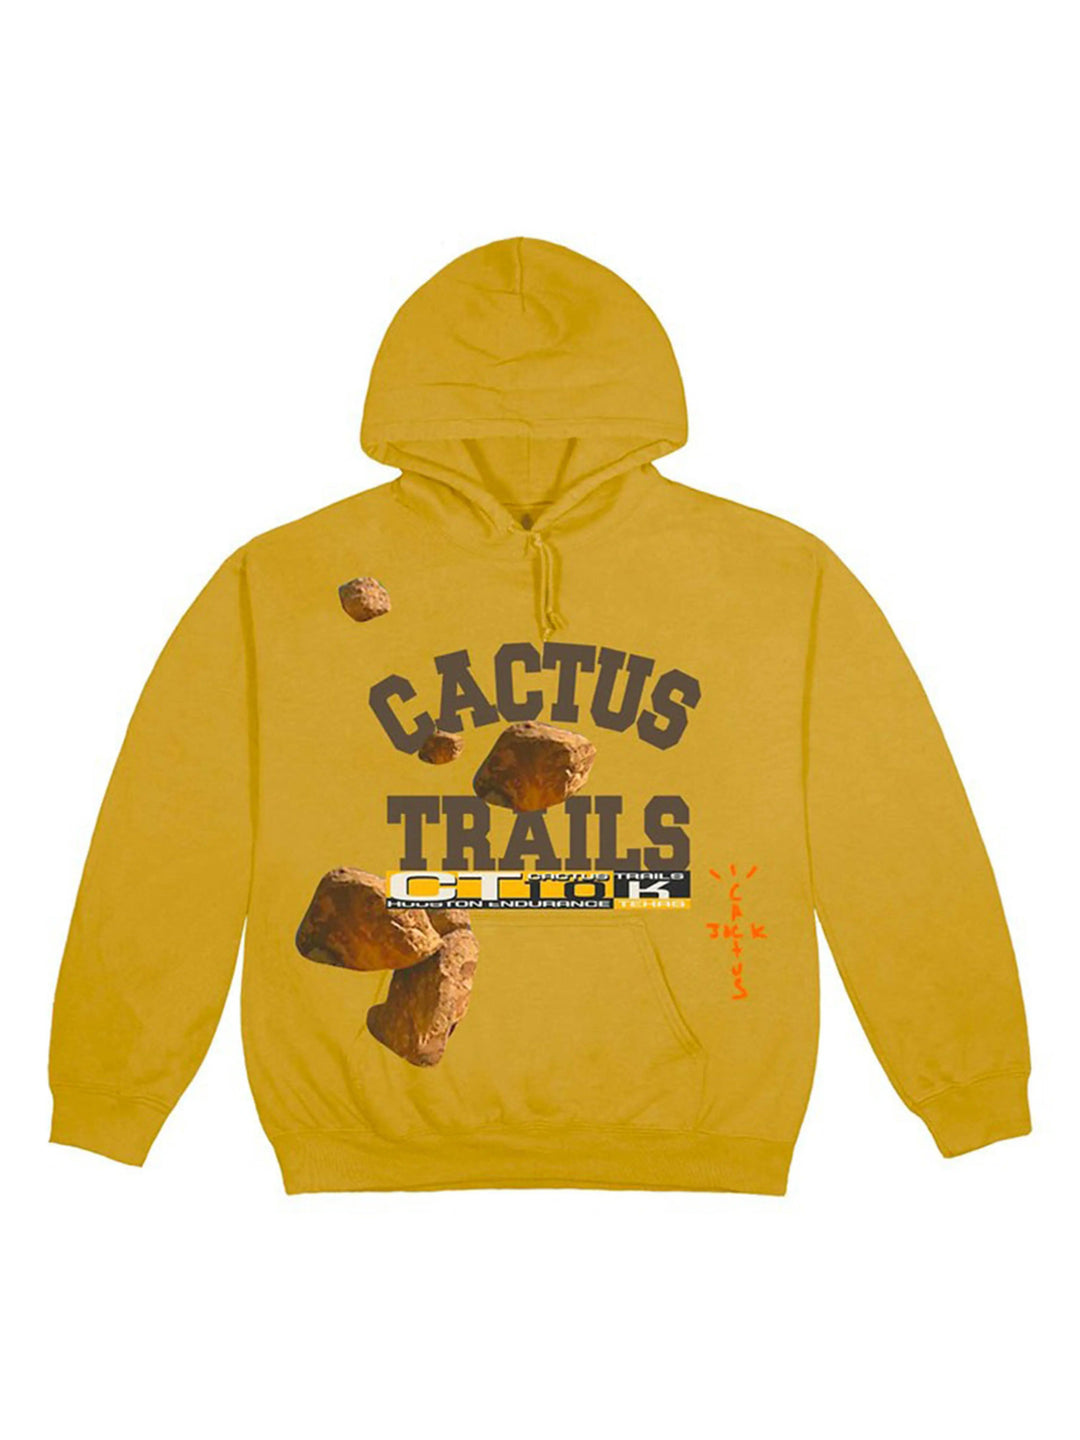 Travis Scott Cactus Trails Hoodie Yellow Prior